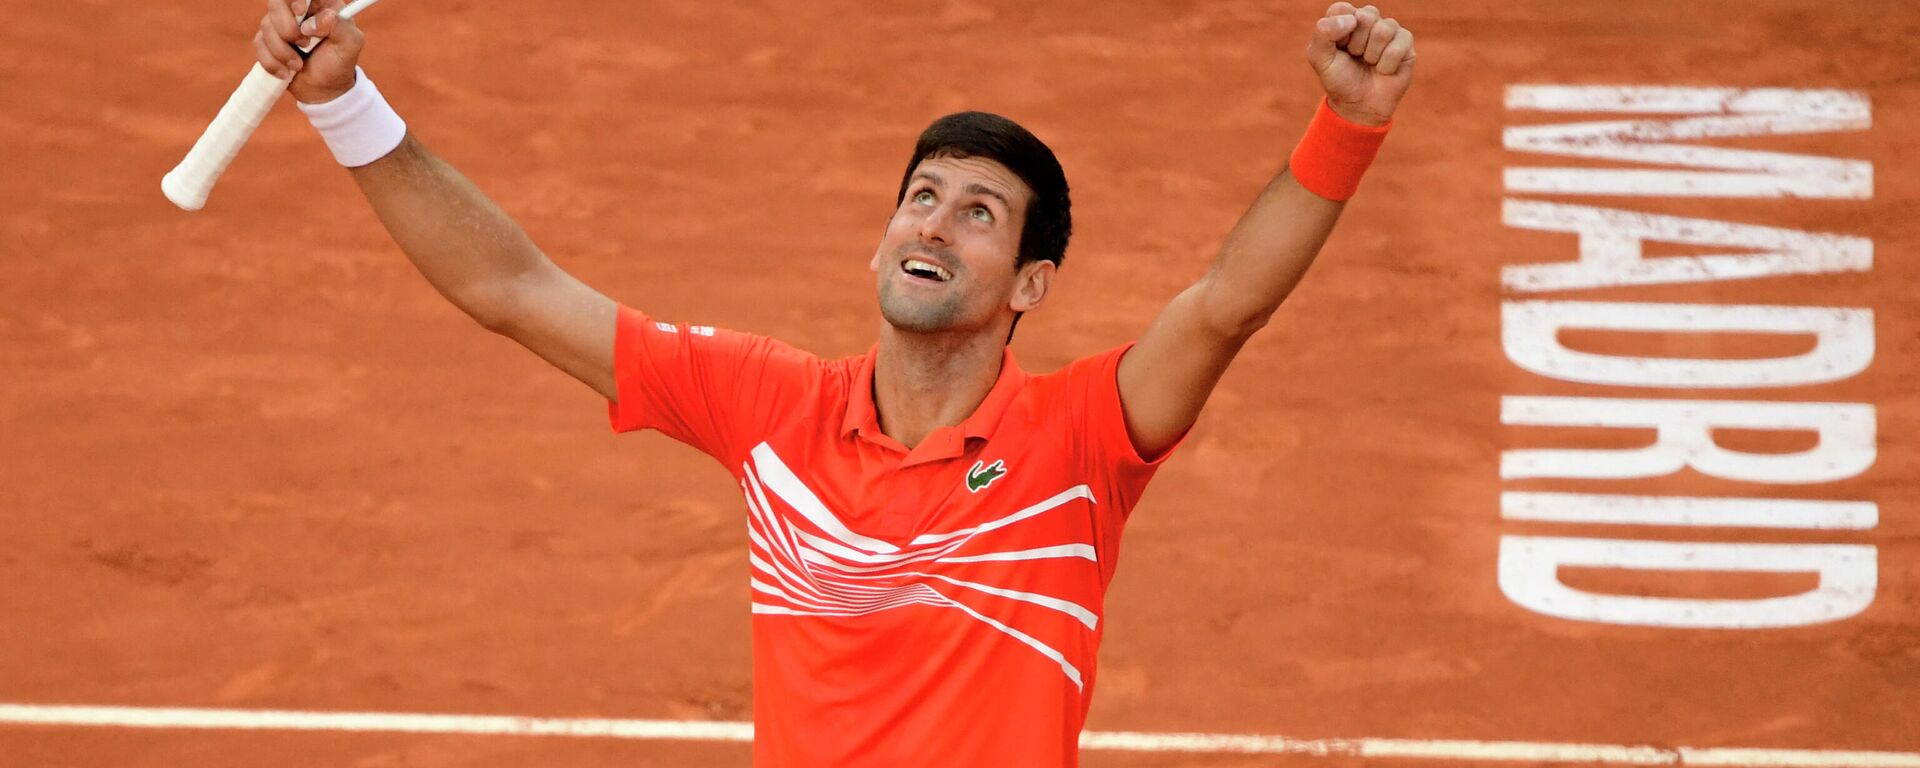 Novak Djokovic tras ganar el Masters 1000 de Madrid en 2019 - Sputnik Mundo, 1920, 17.01.2022